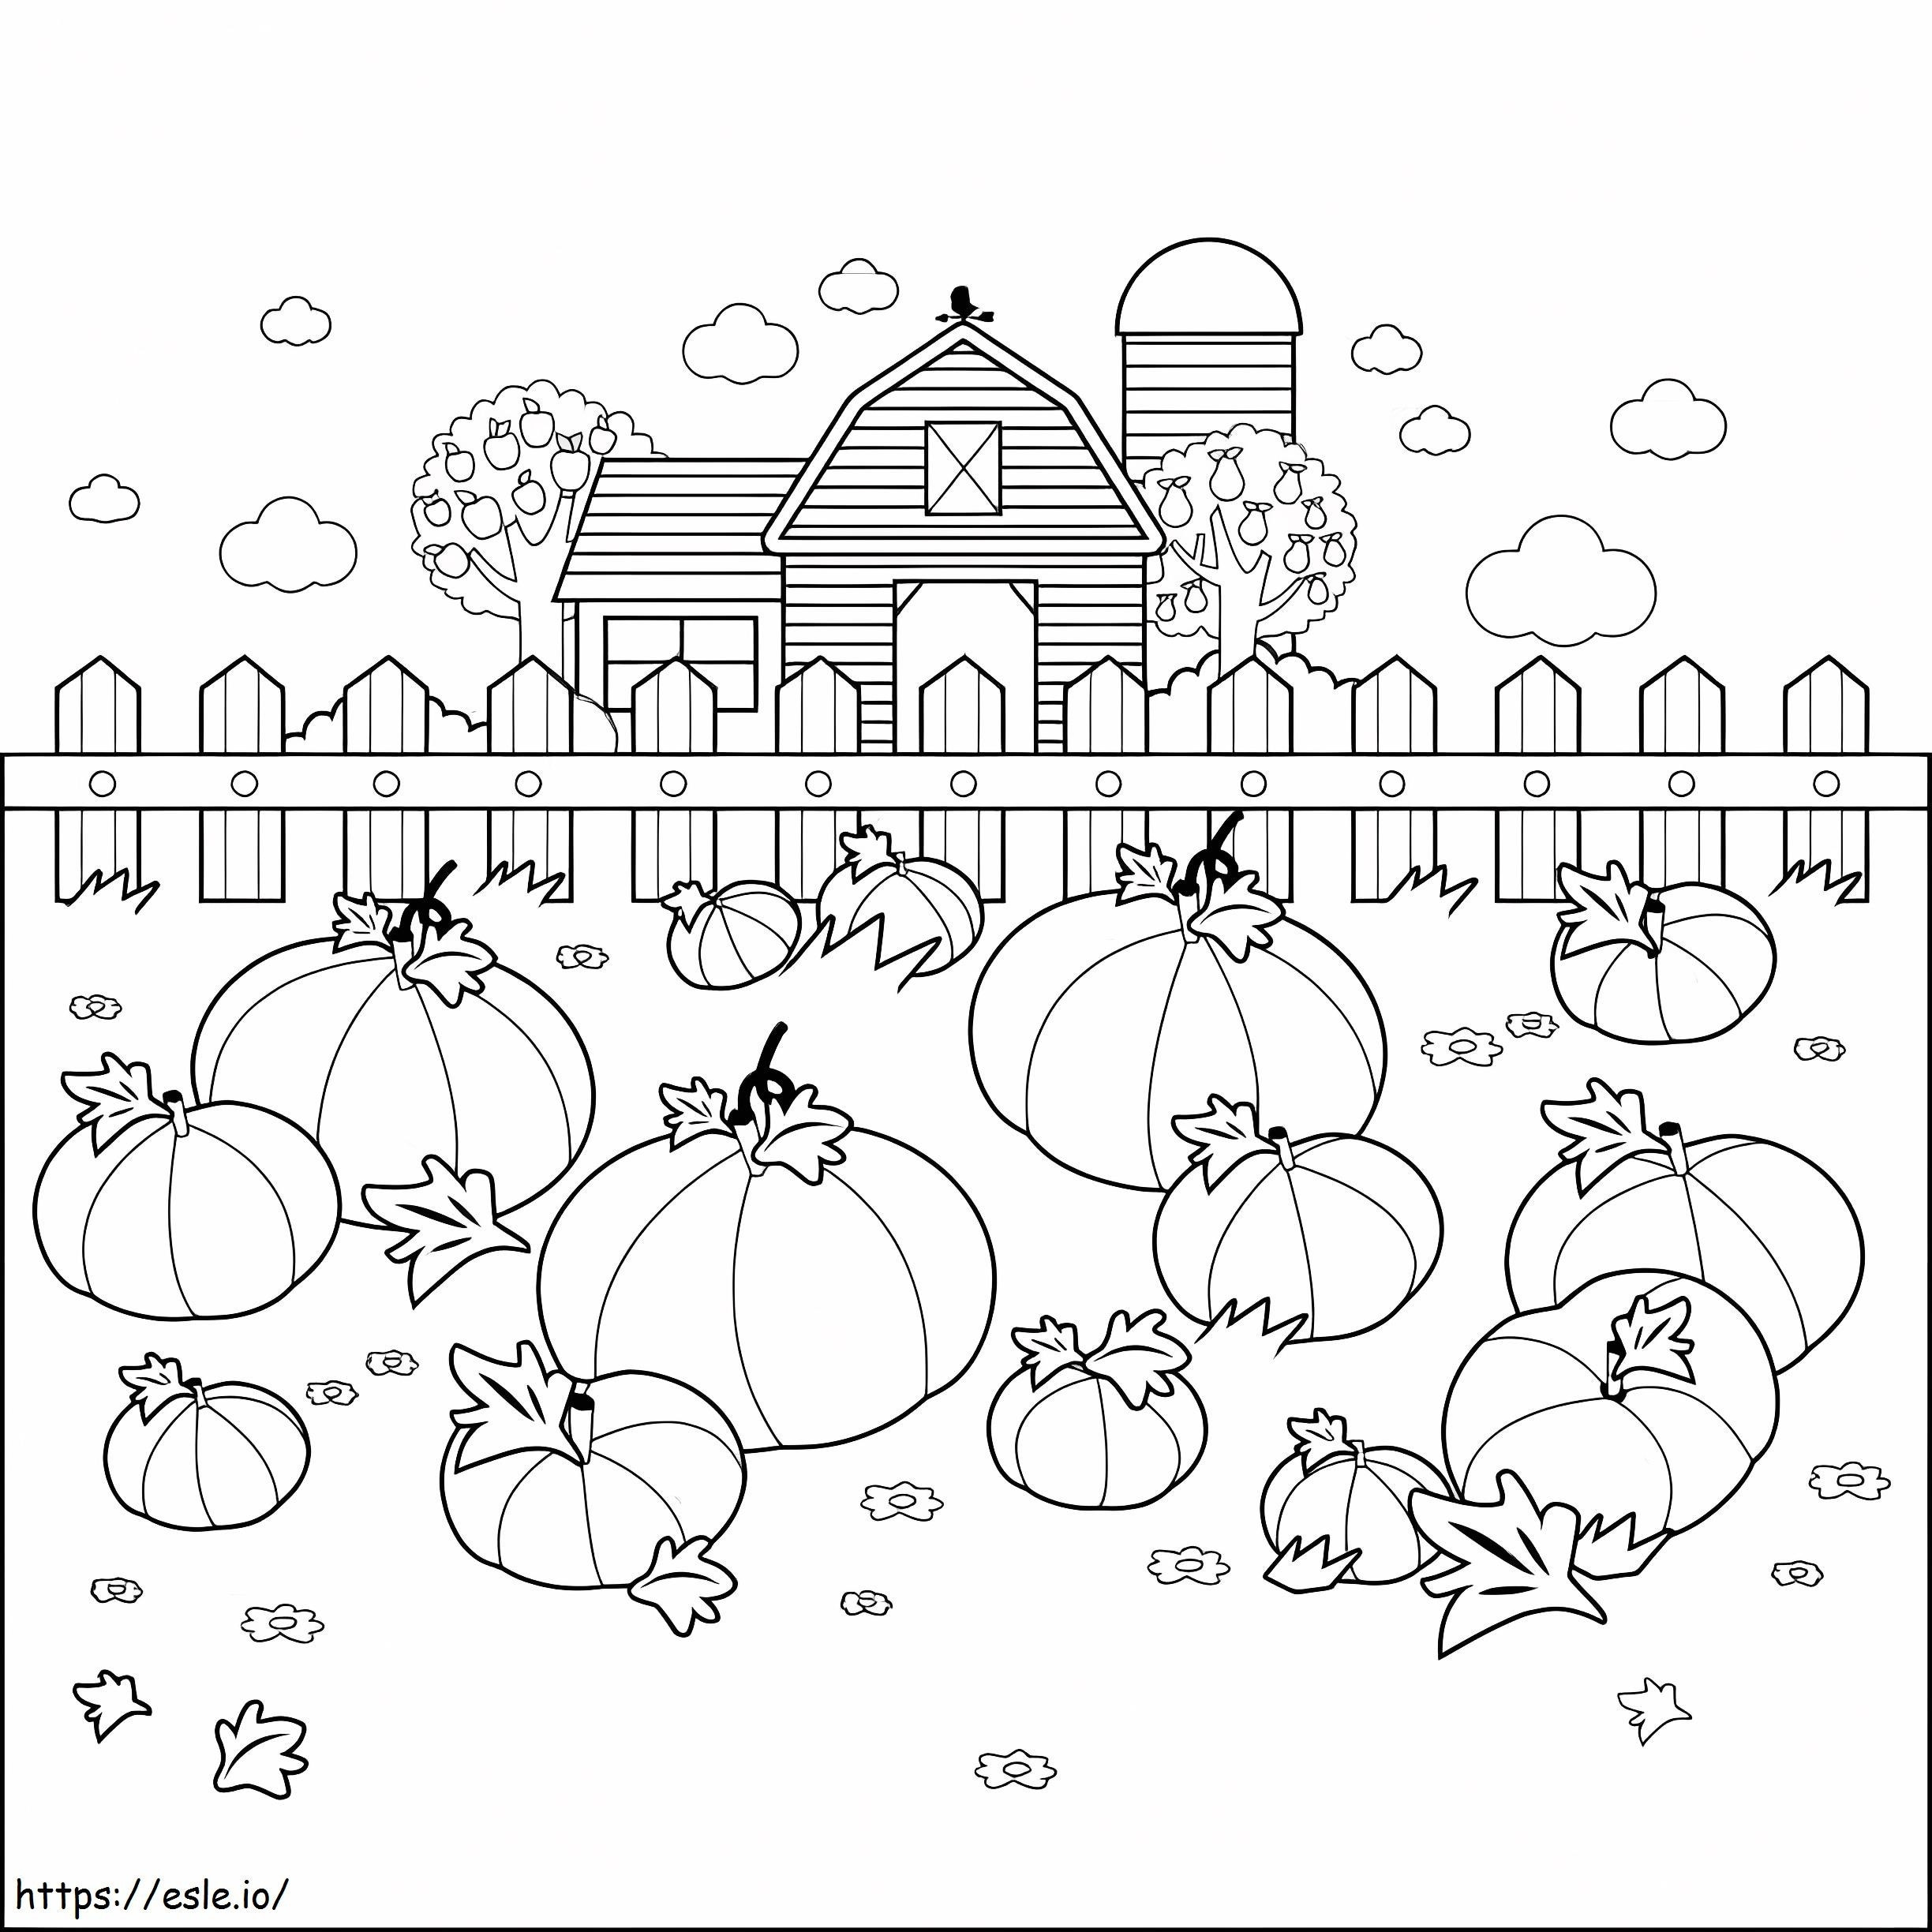 Pumpkin Farm coloring page